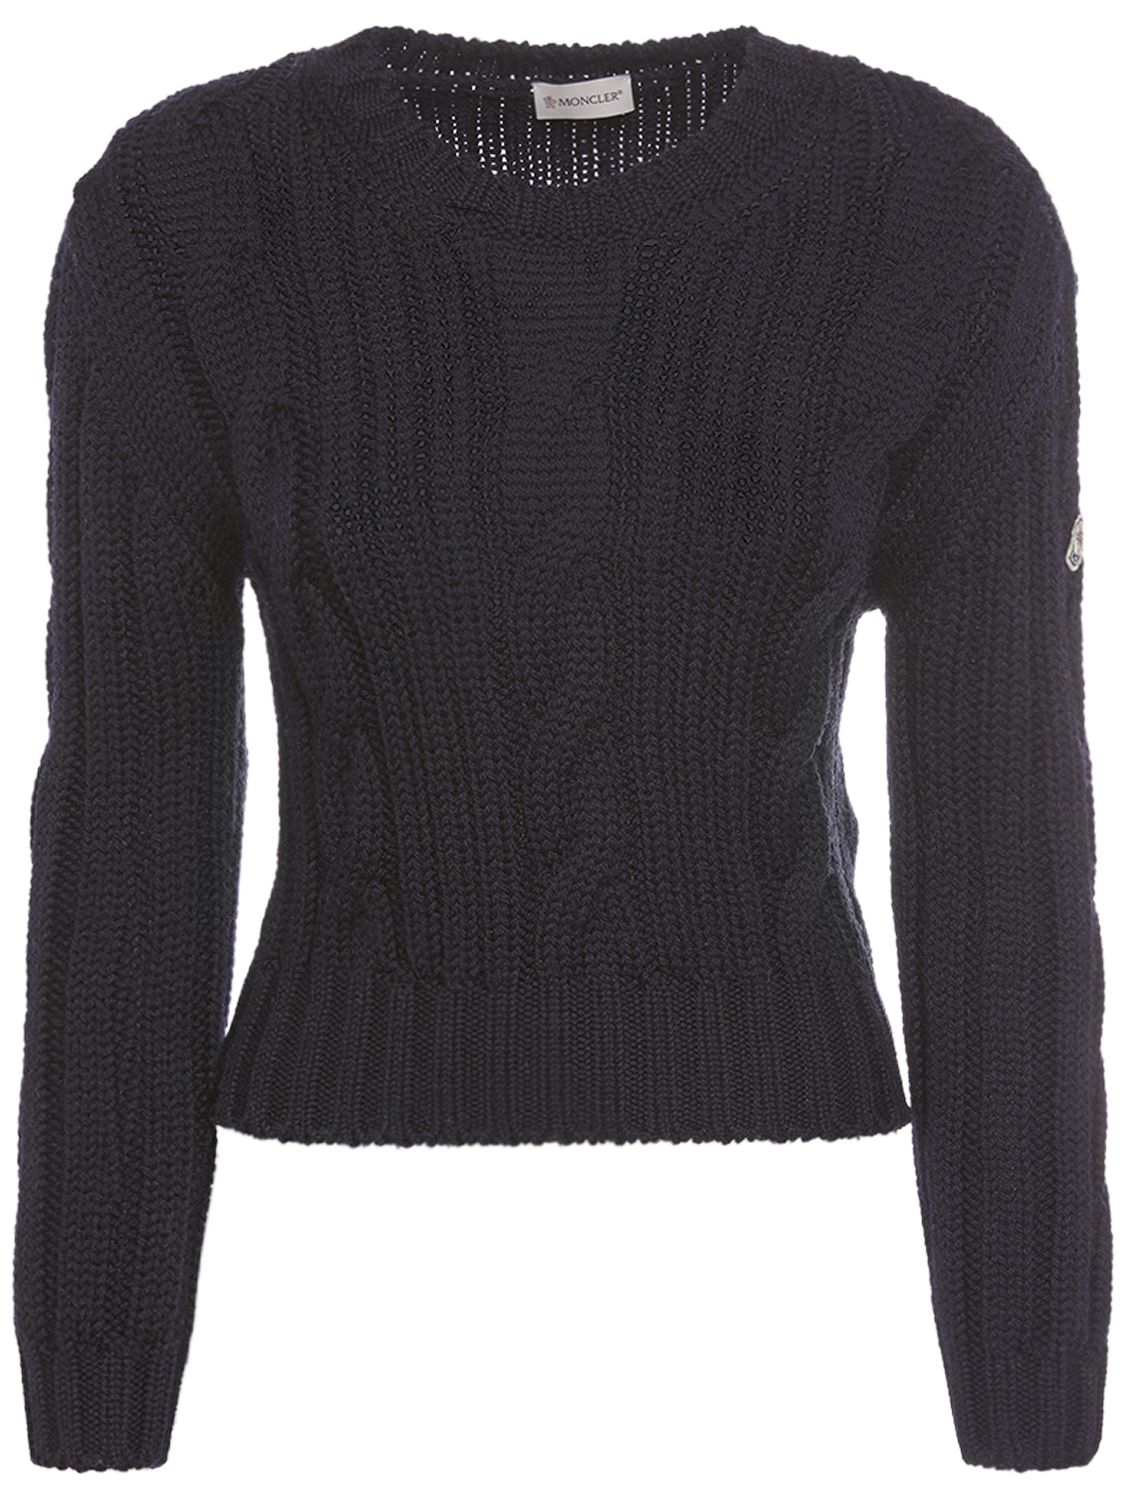 Tricot Wool Crewneck Sweater